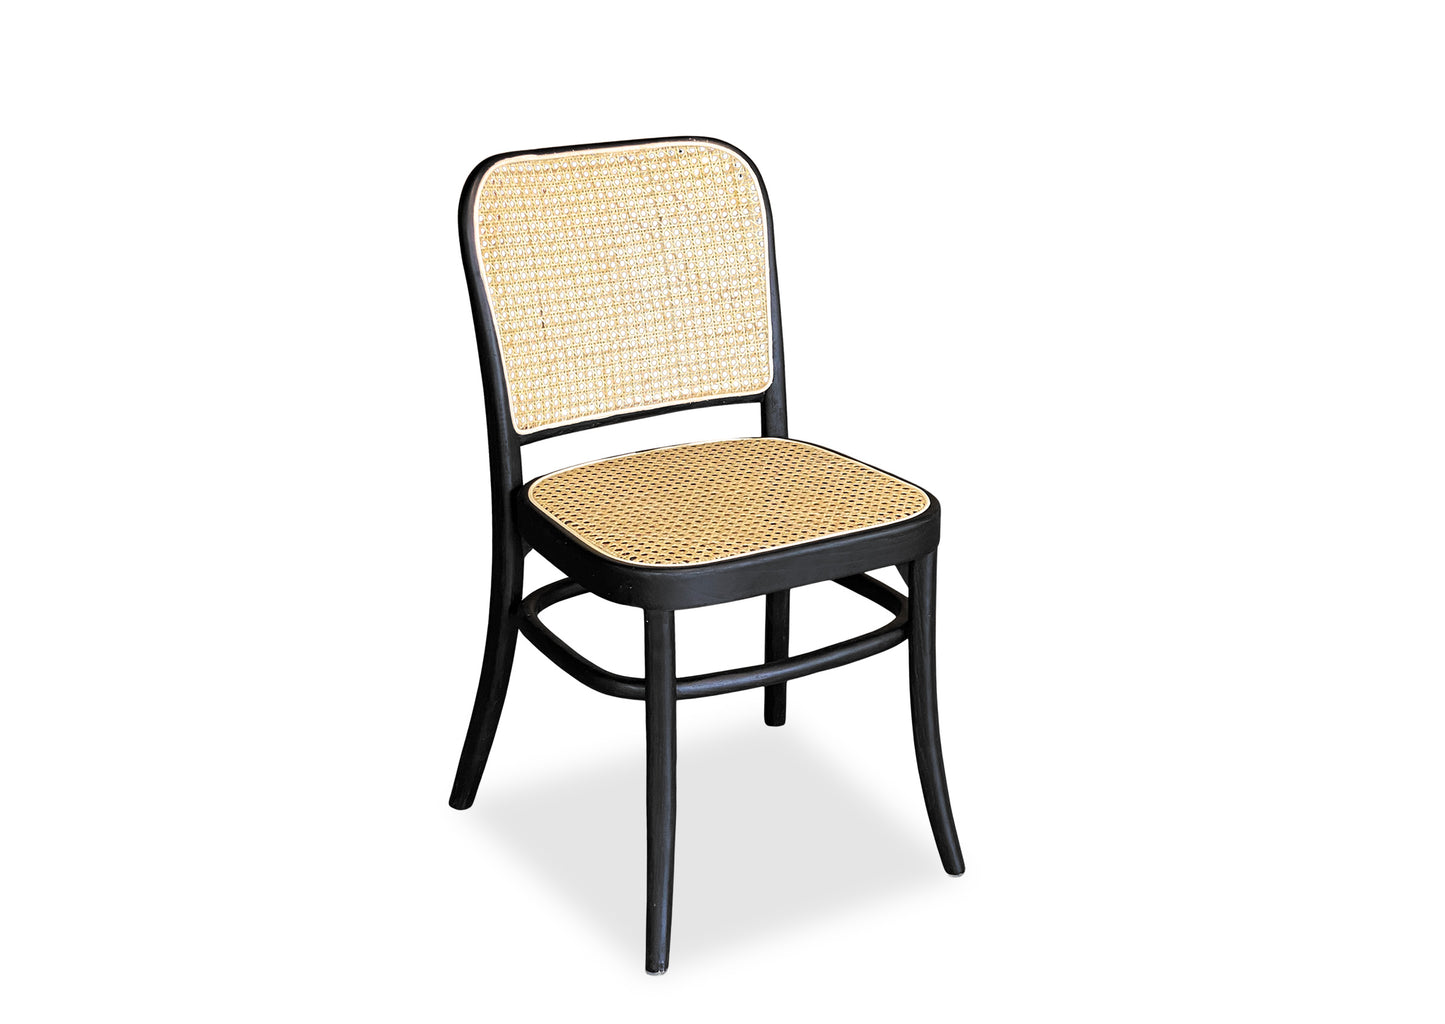 Calypso Chair - Black